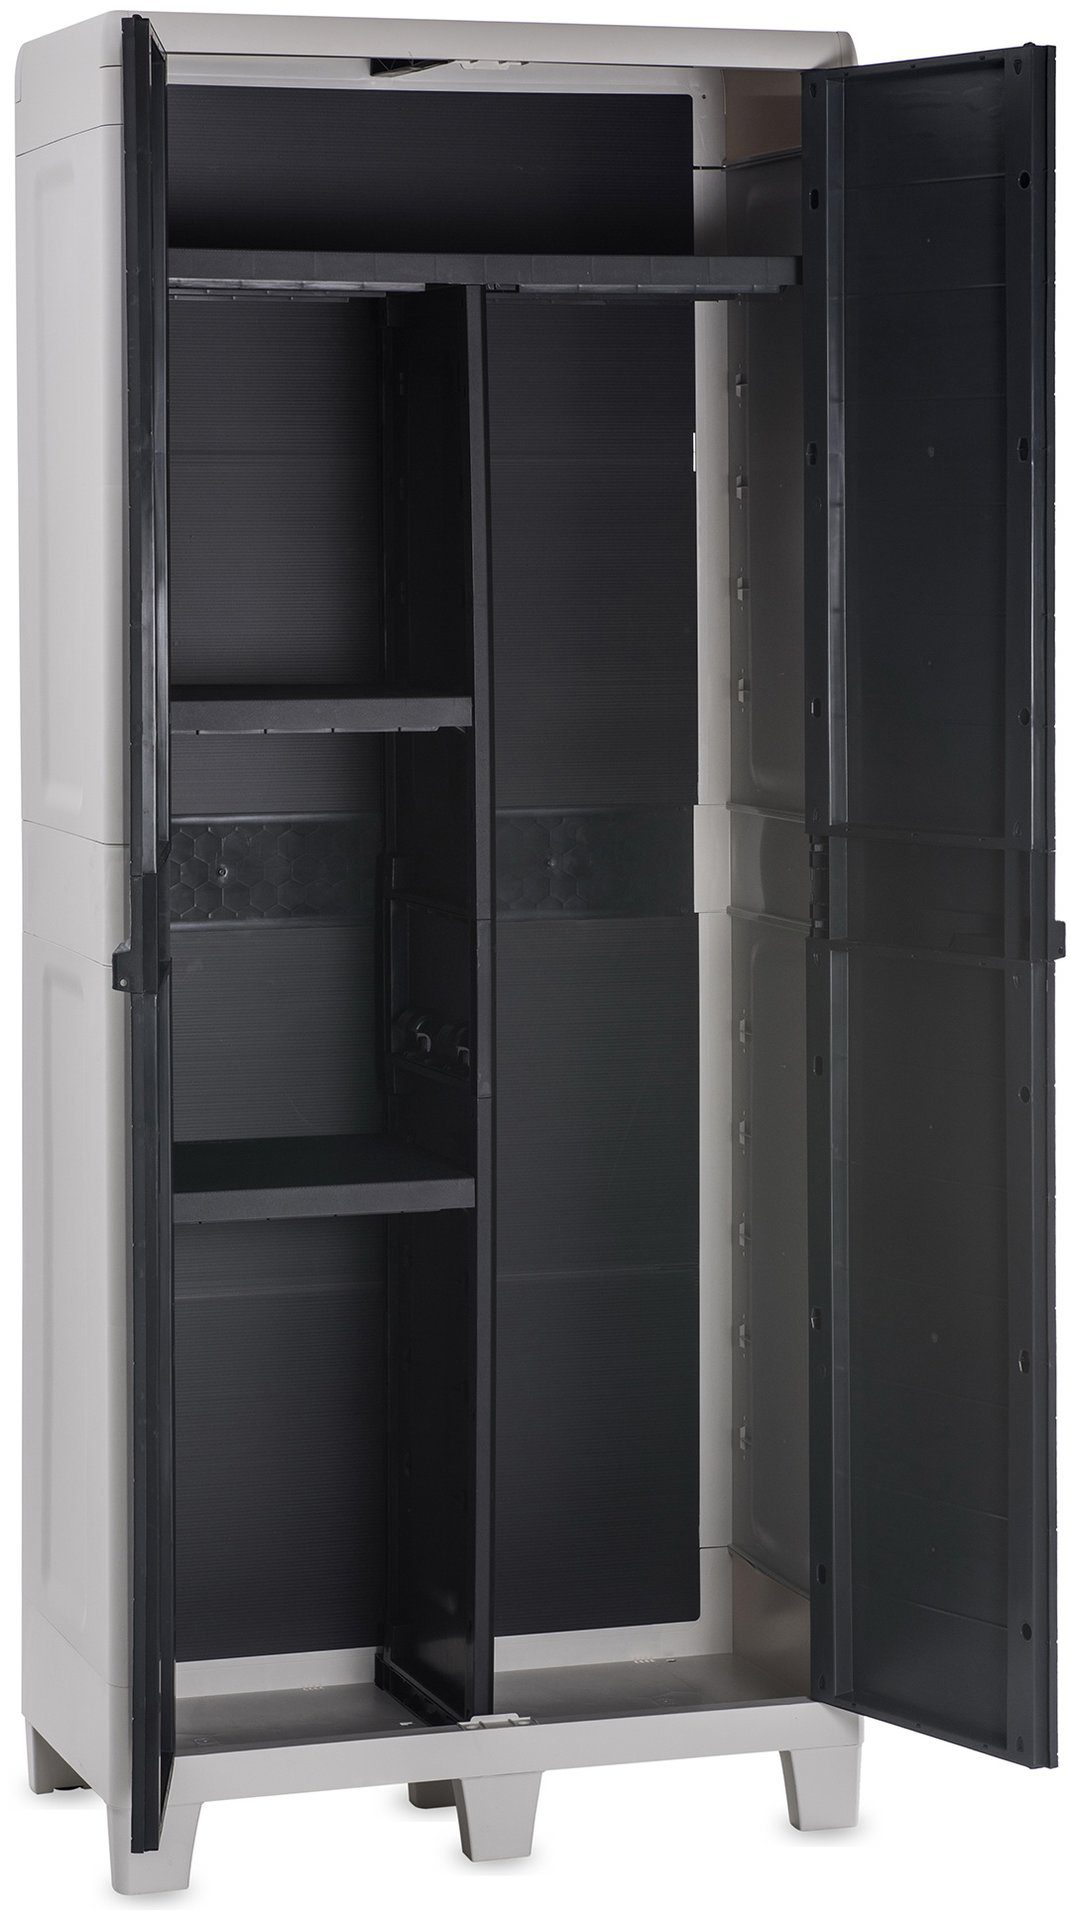 Шкаф TOOMAX WOODY'S XL (глубокий), 2-х дверный с 3 полками, арт. 076, дверцы антрацит